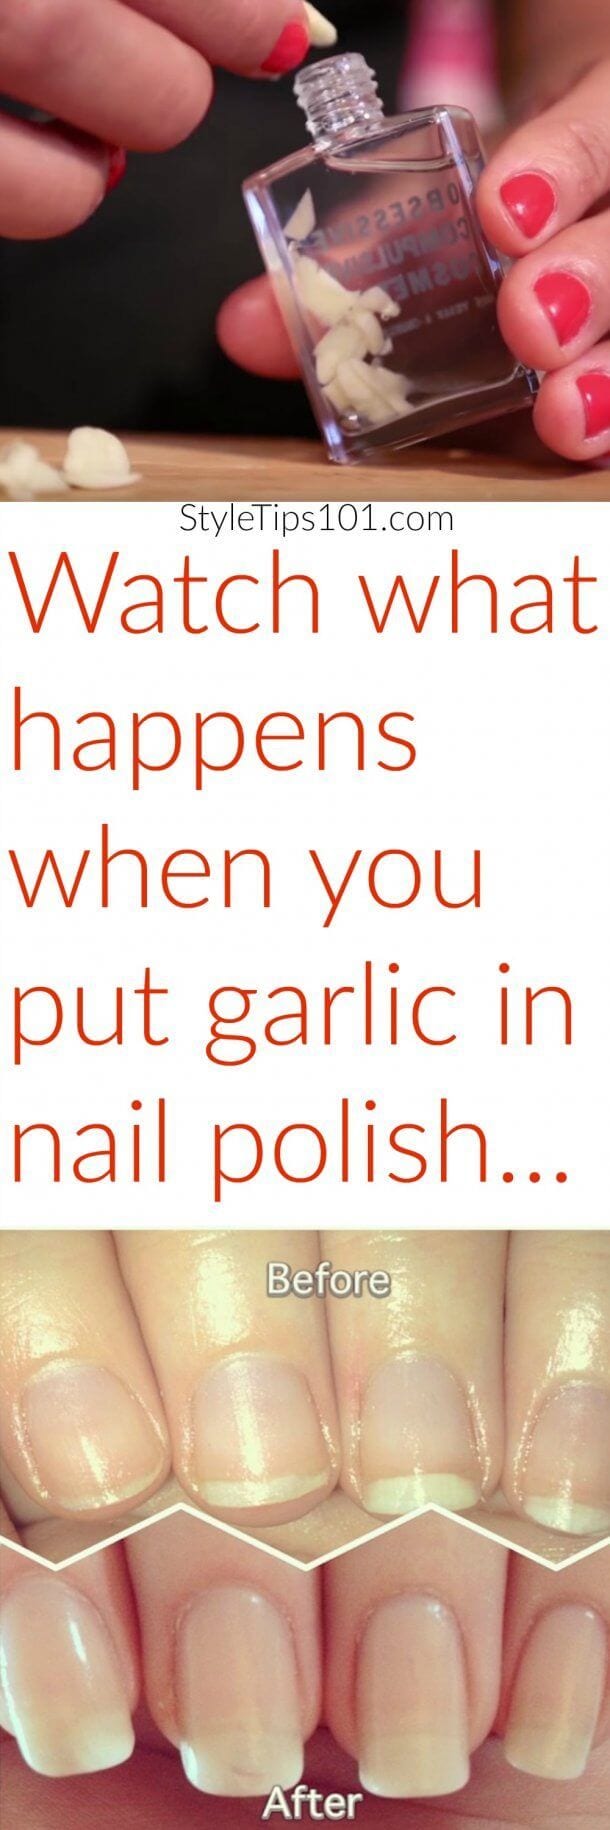 [ad_1]

Garlic in Nail Polish
Source by martajarosova78
[ad_2]
			
			…